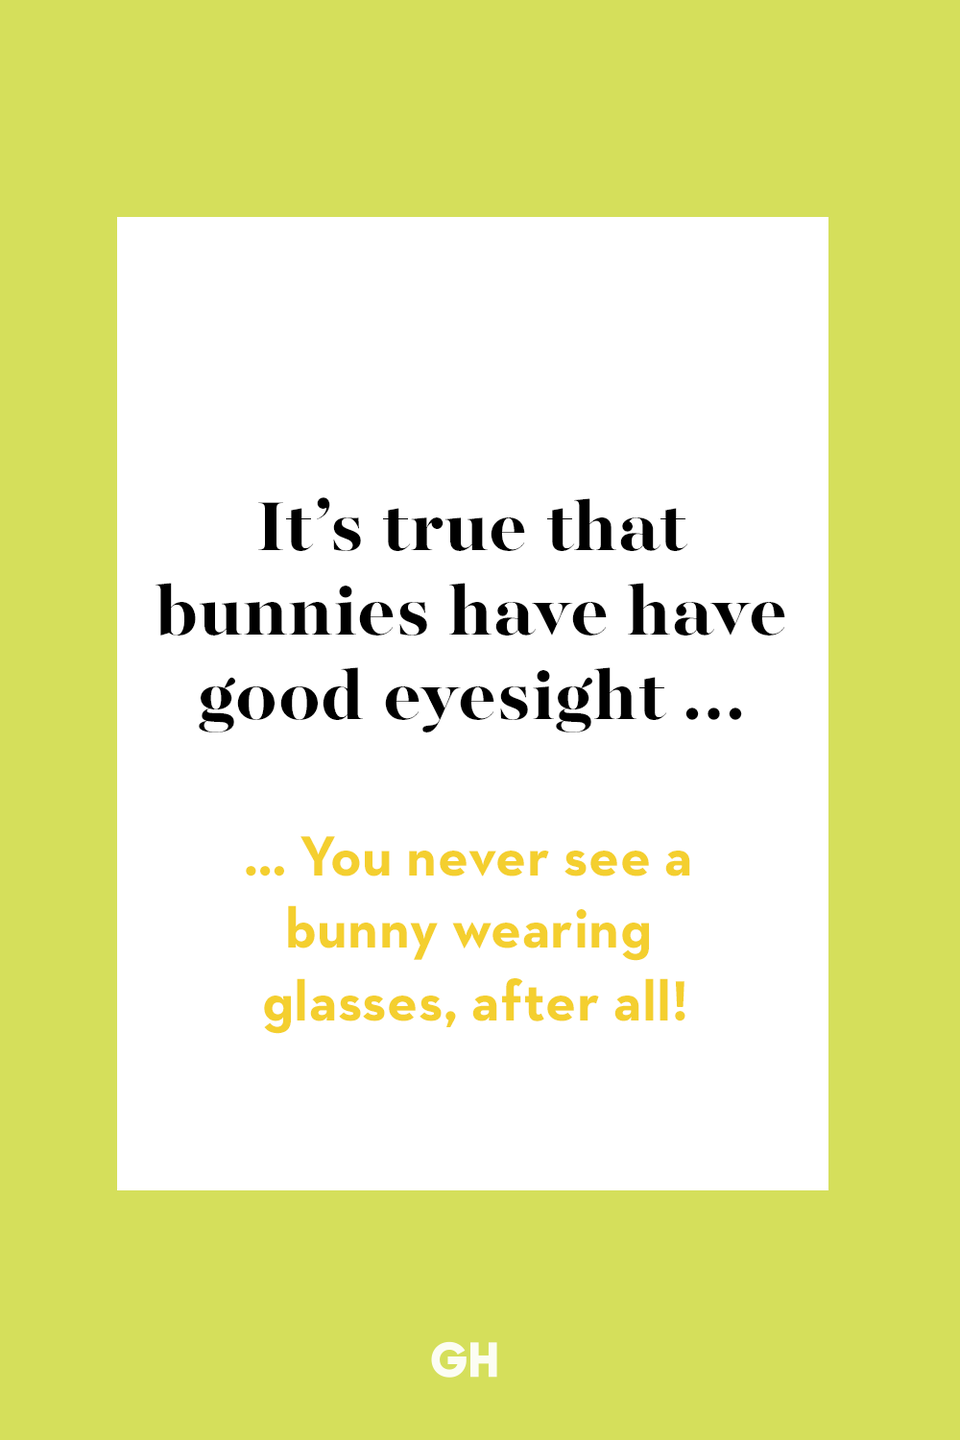 71) It’s true that bunnies have have good eyesight …